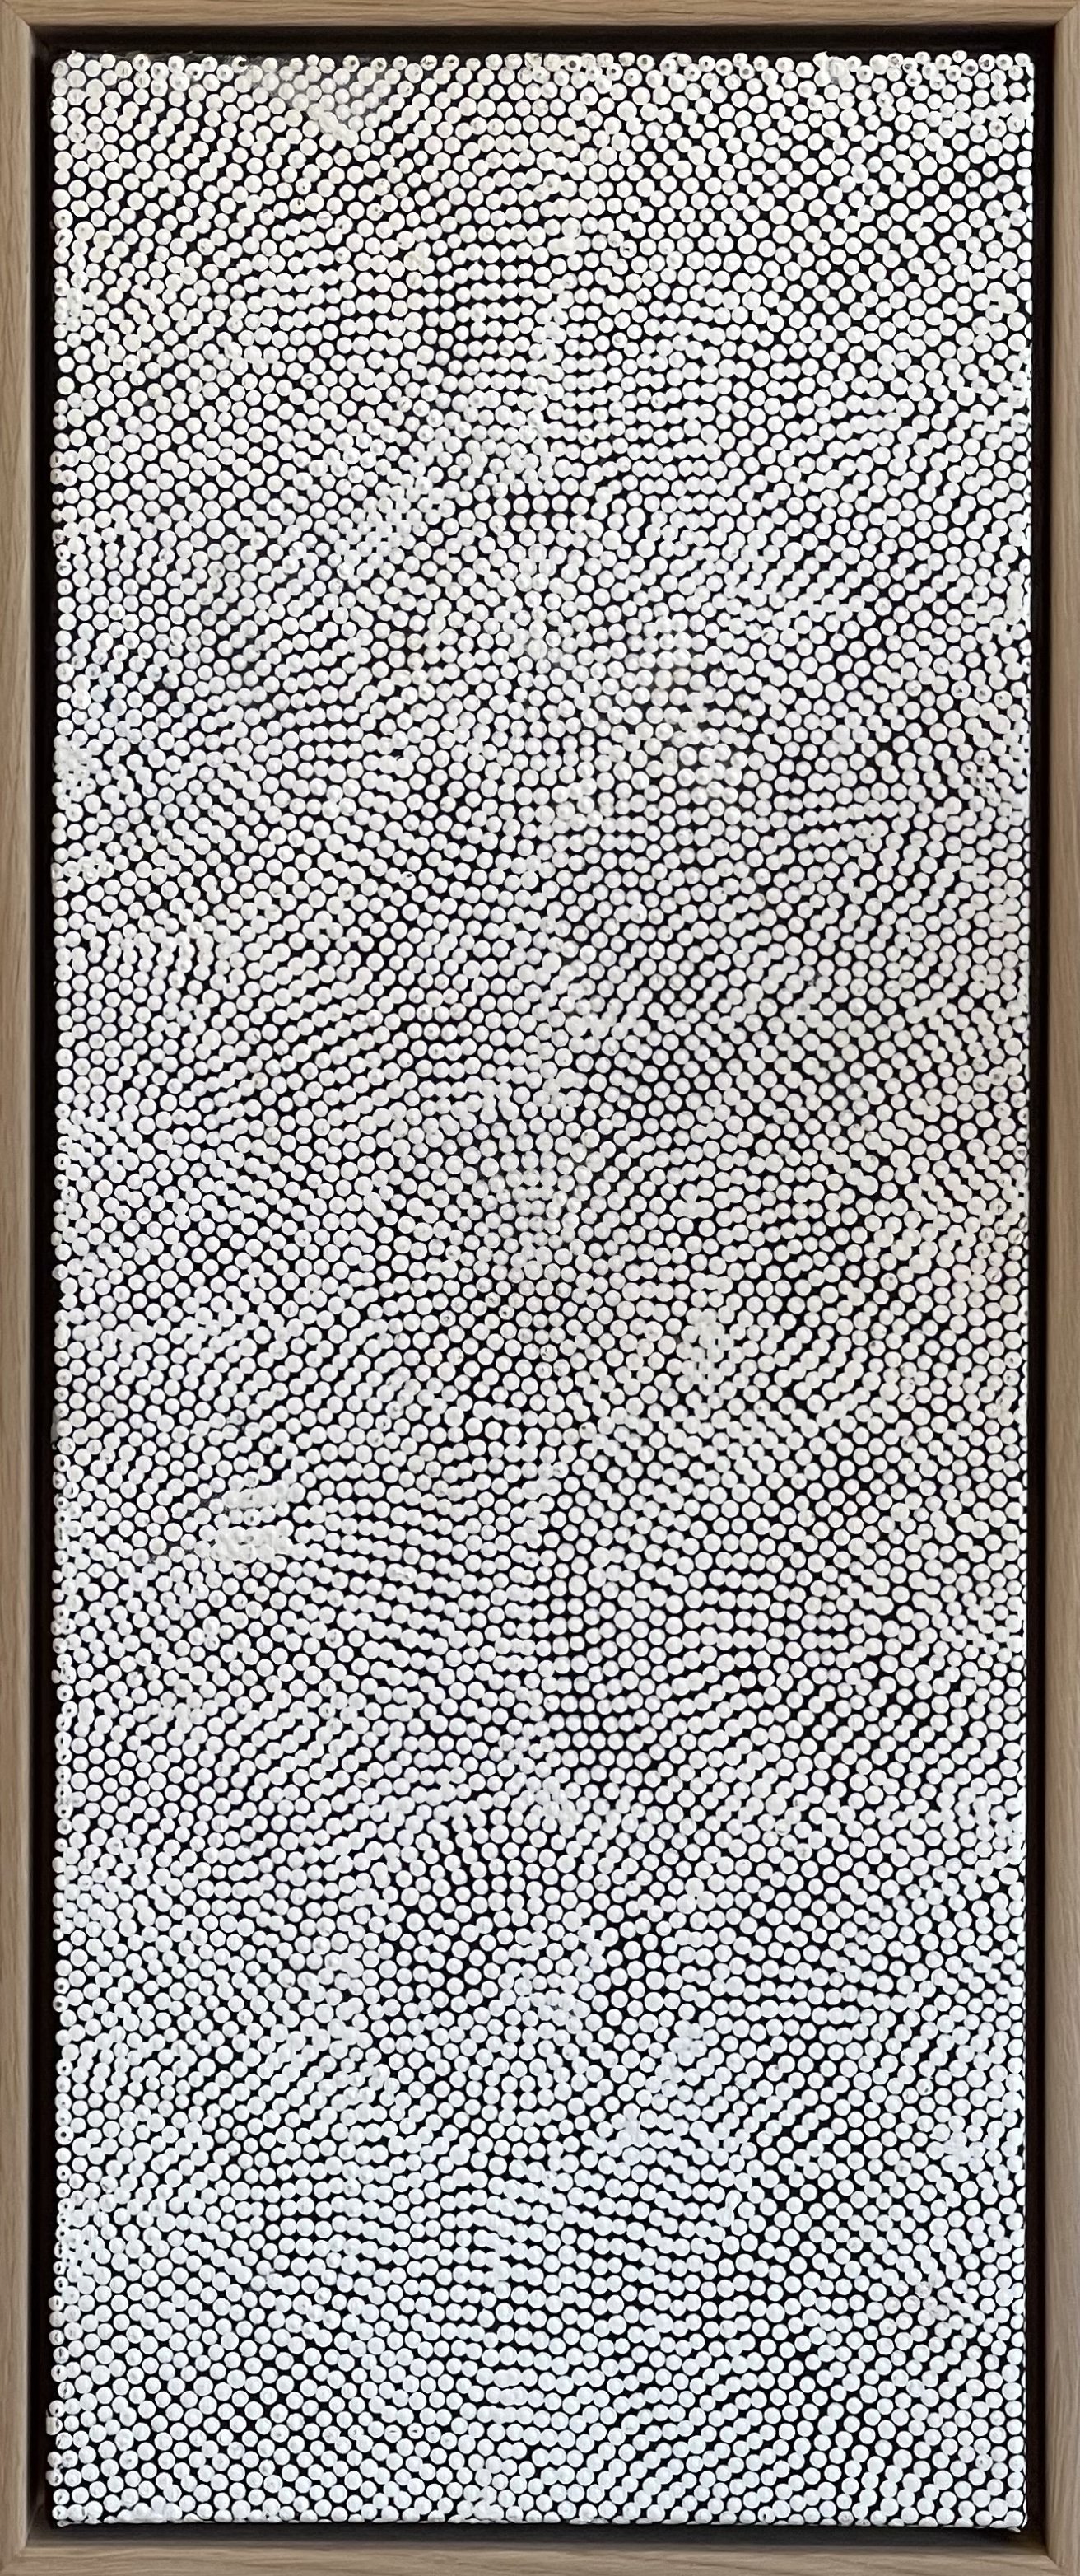 LIZZIE NUNGARRAYI SPENCER (WARLU) Water Dreaming 30x76cm framed acrylic on canvas $700